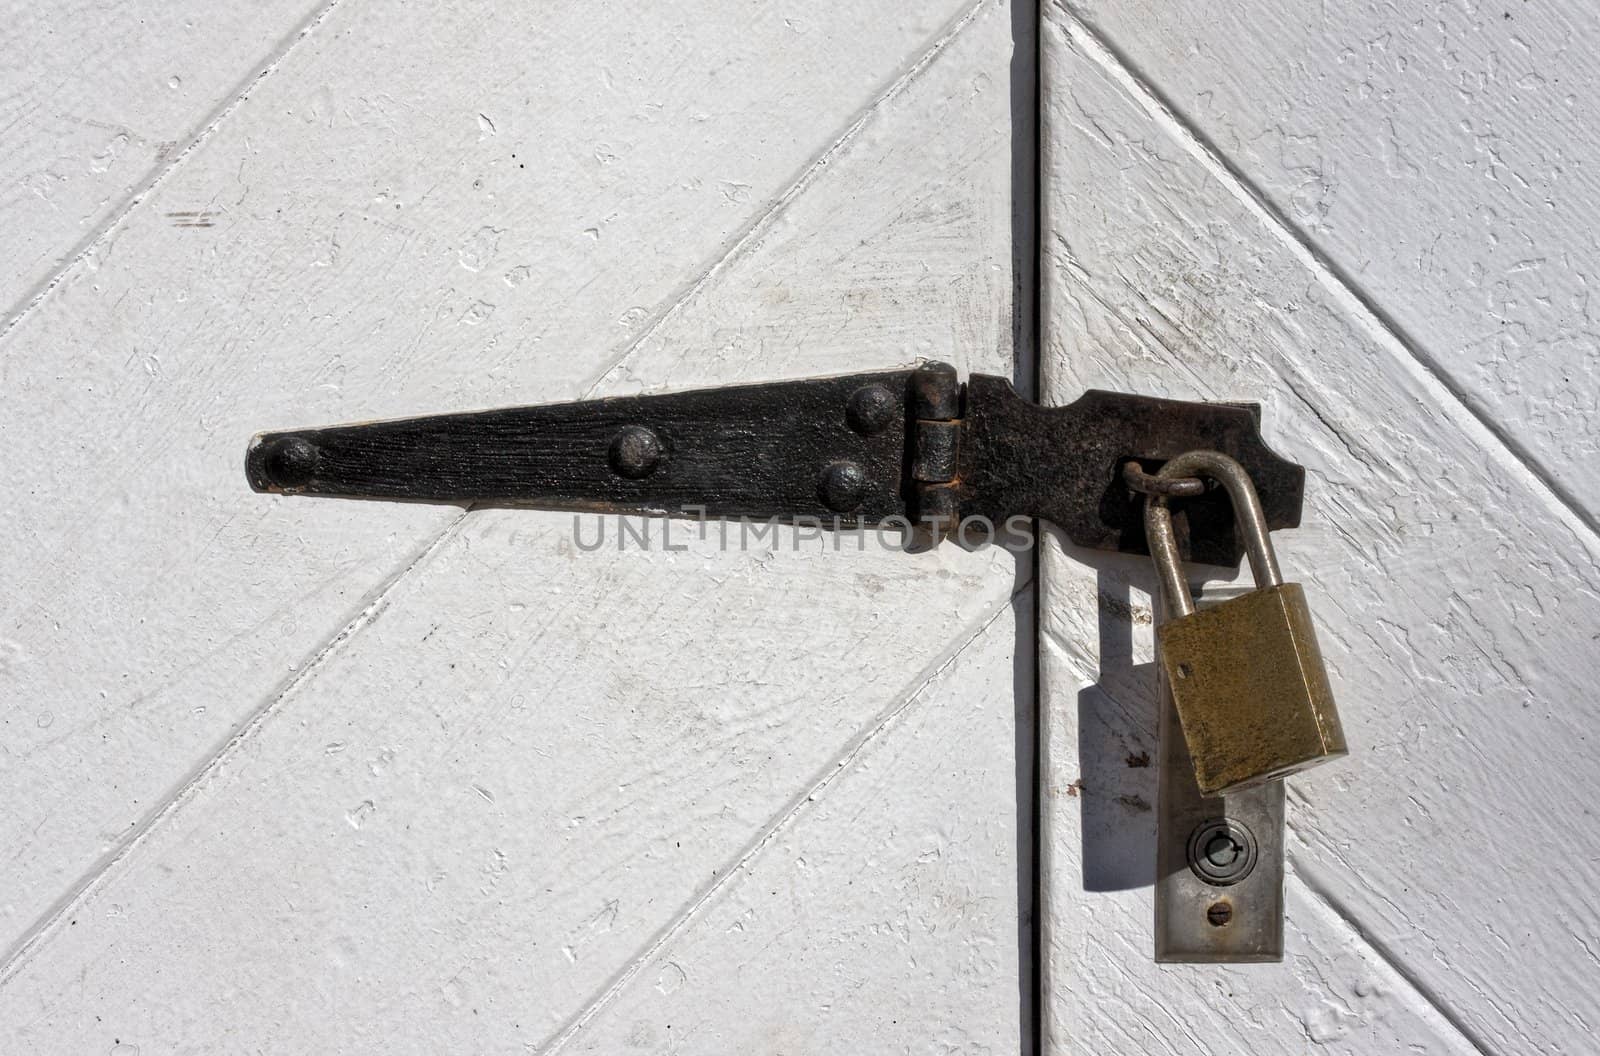 A locked padlock on old doors